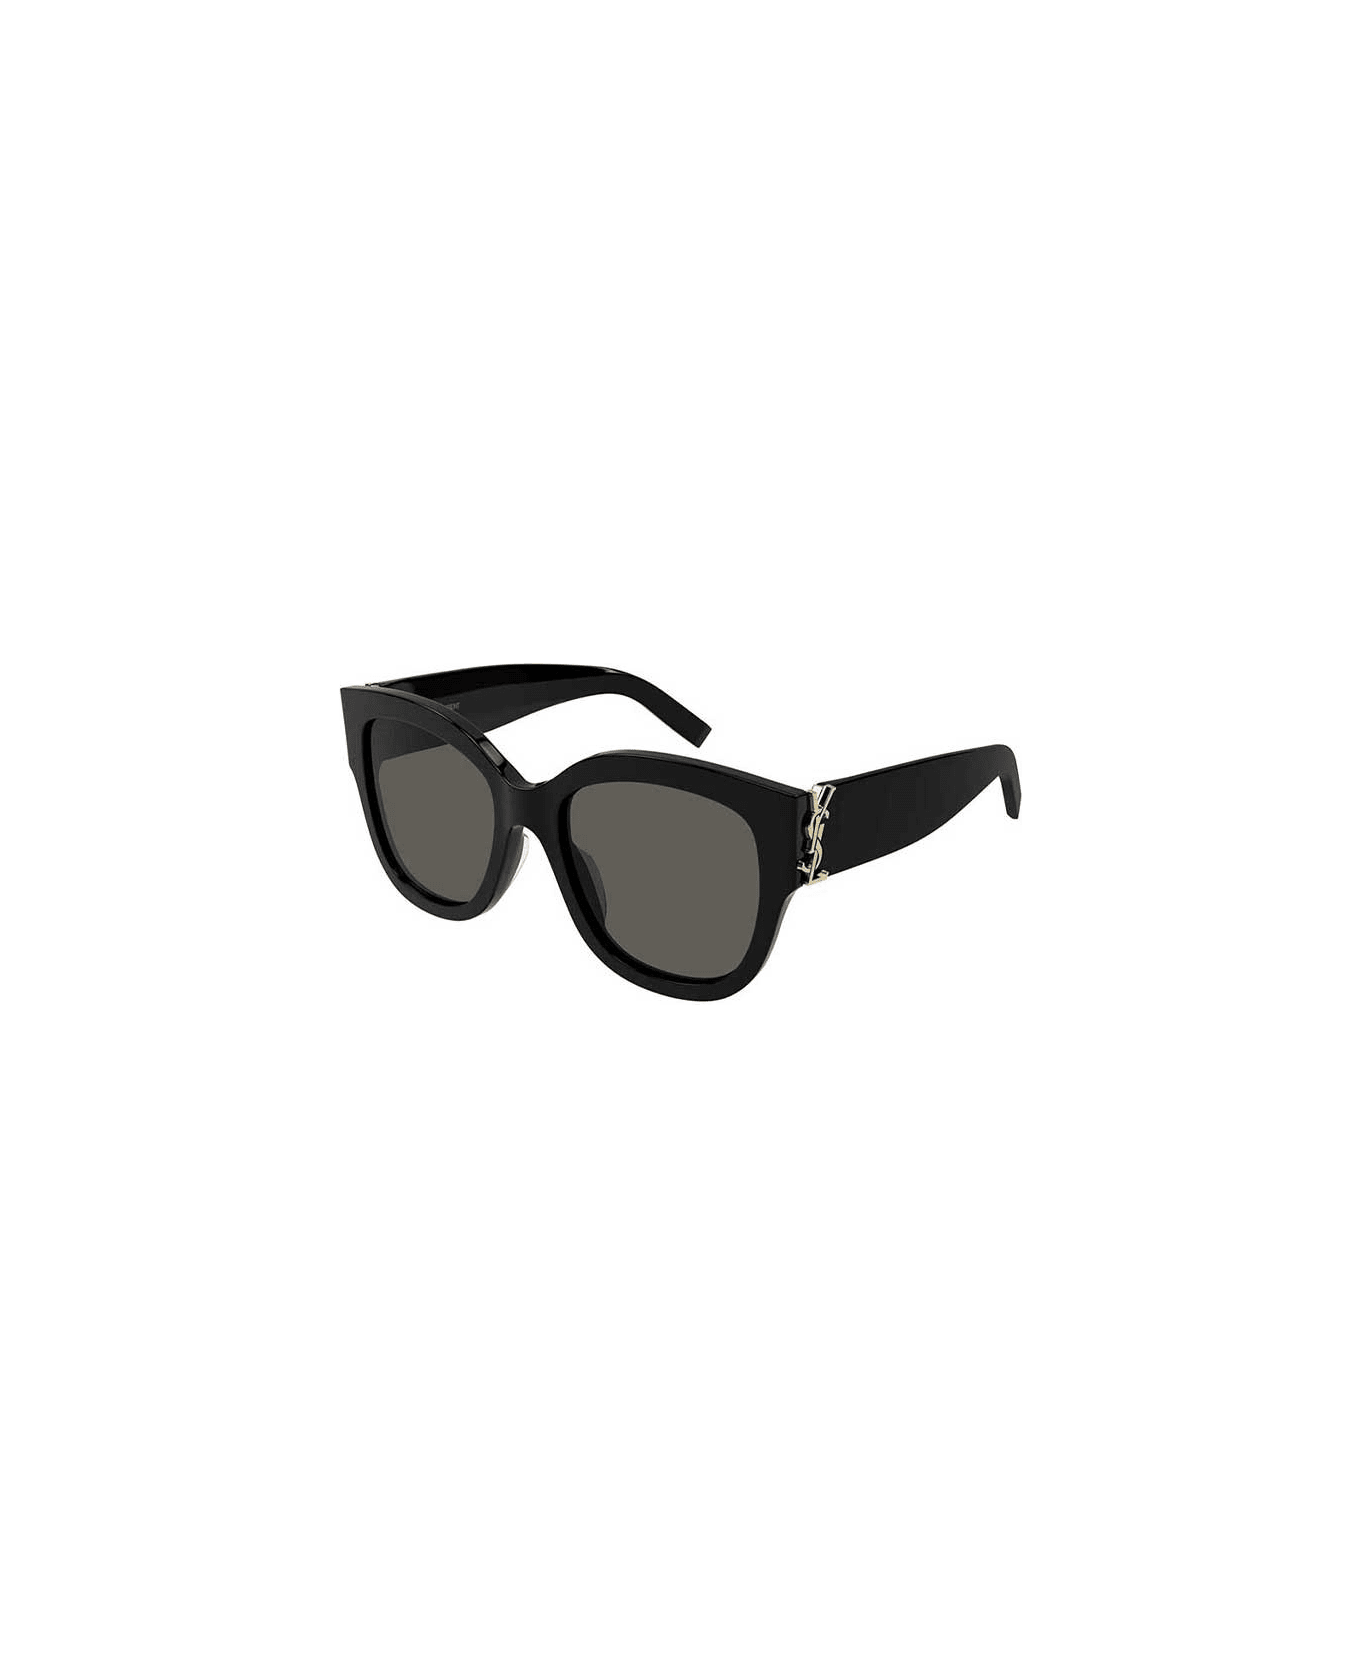 Saint Laurent Eyewear Sunglasses - Nero/Grigio サングラス